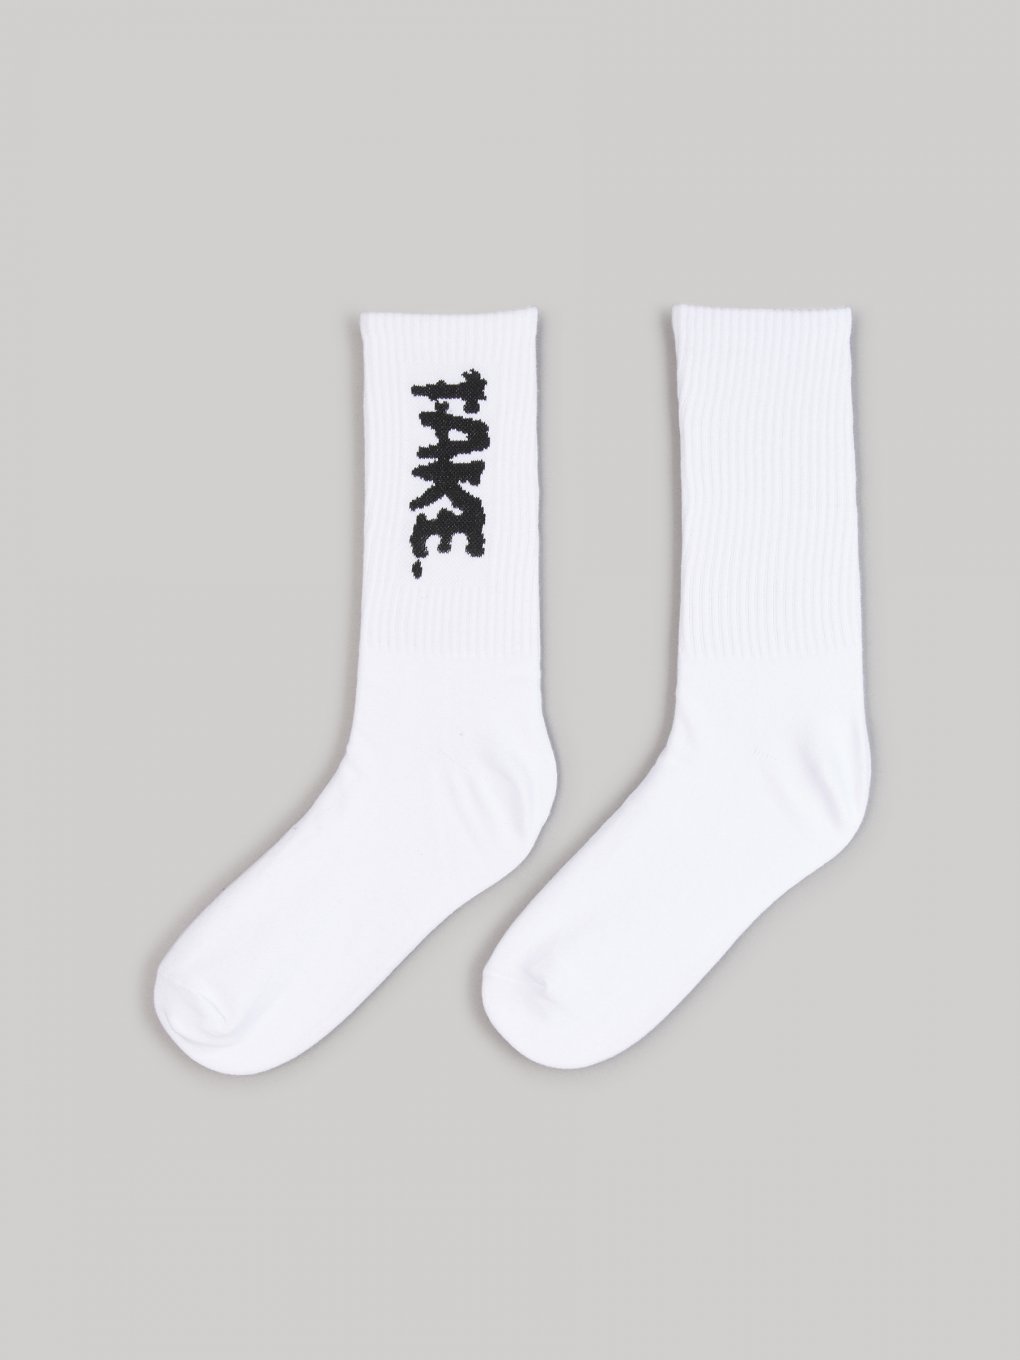 Socks with slogan